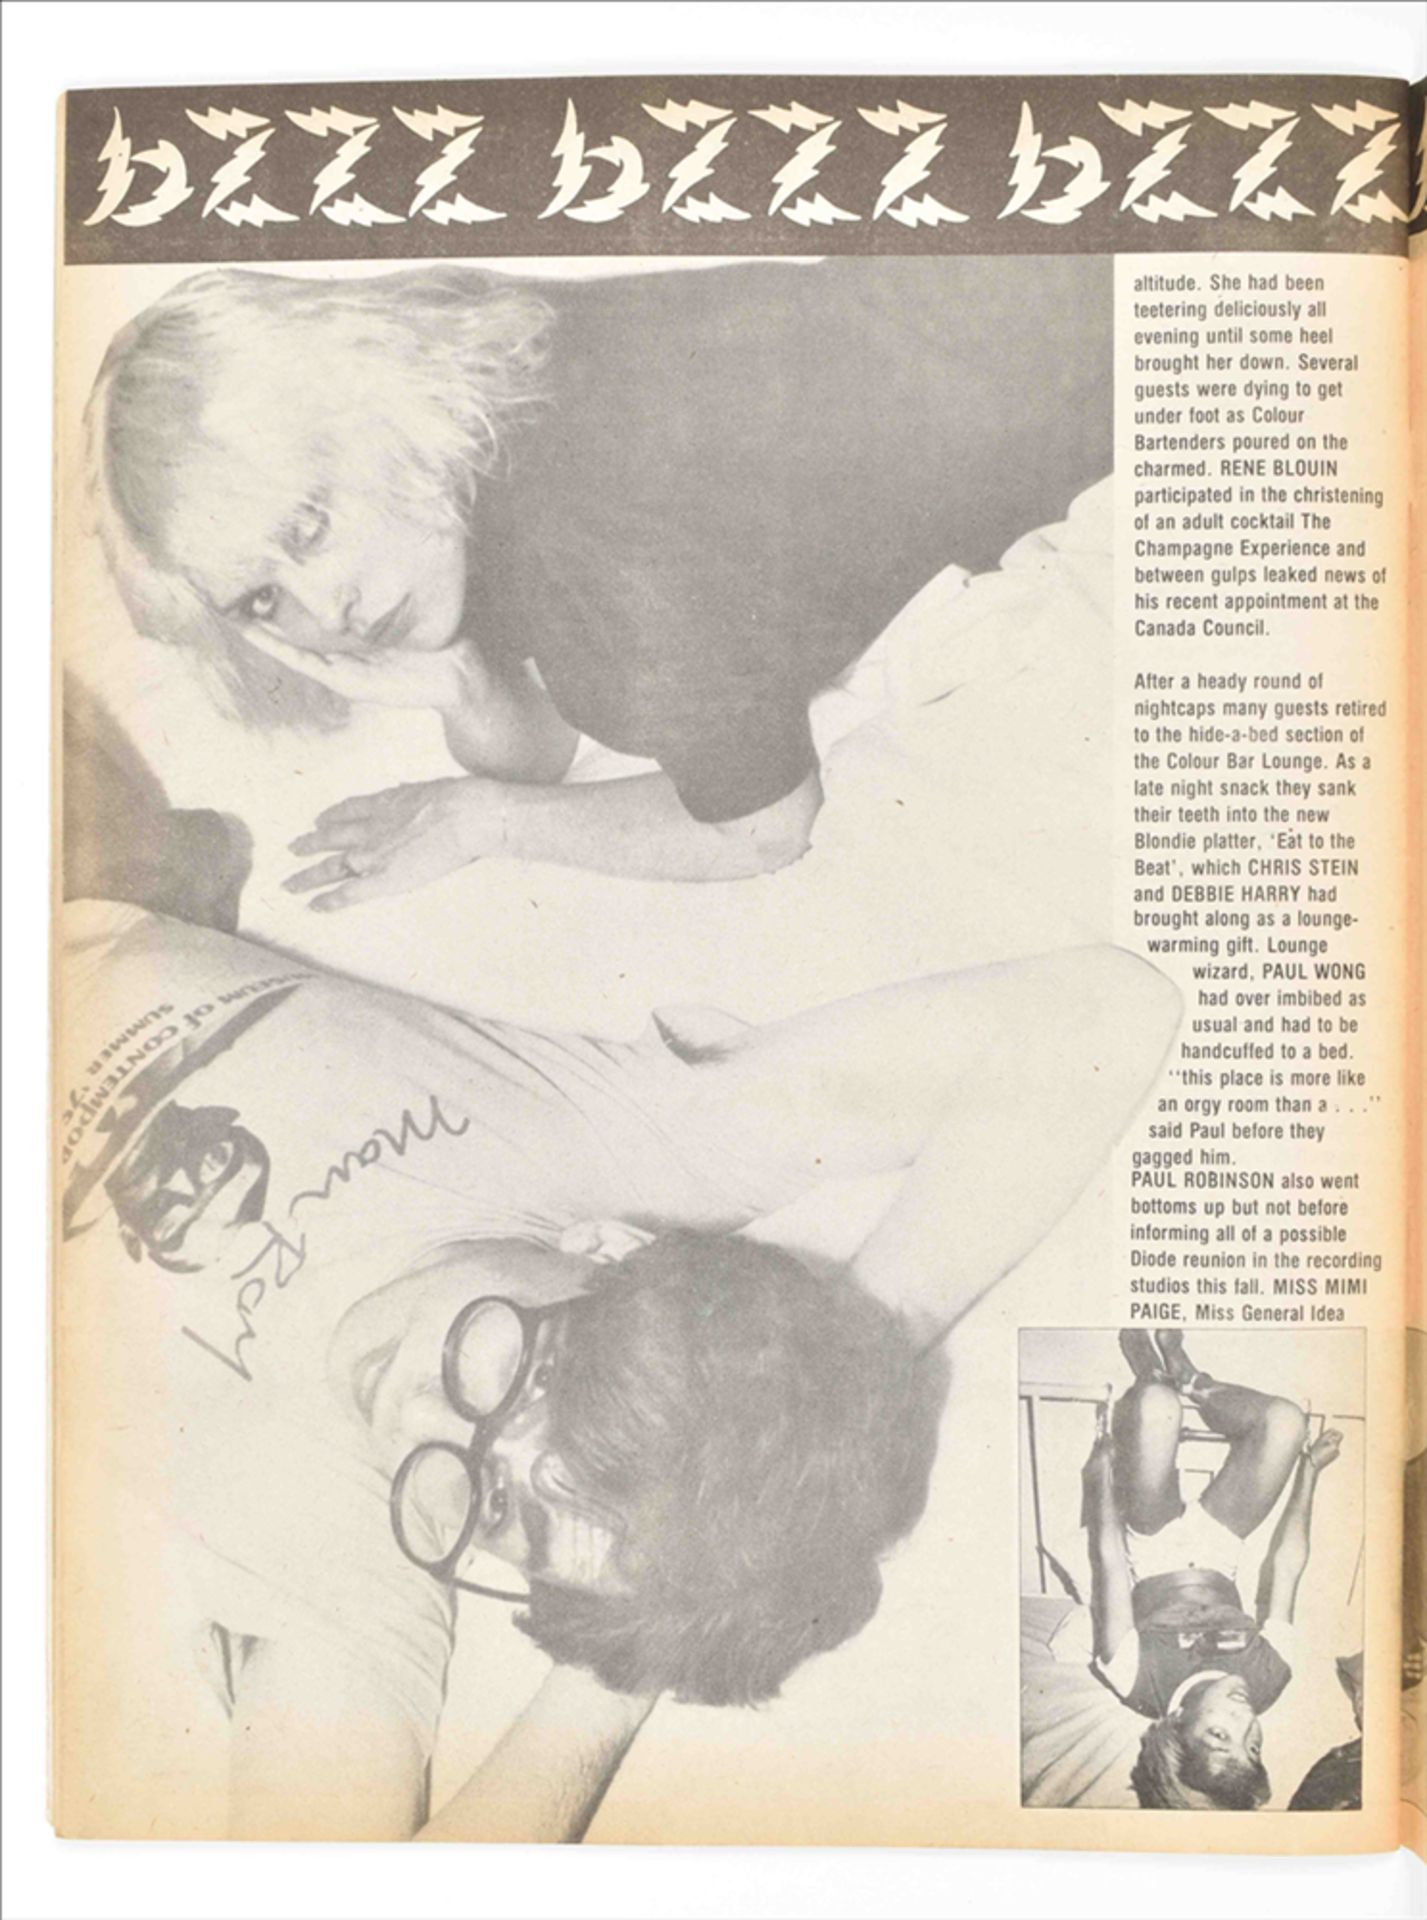 General Idea, File Megazine, Vol. 4 No.2 Fall 1979 - Image 4 of 8